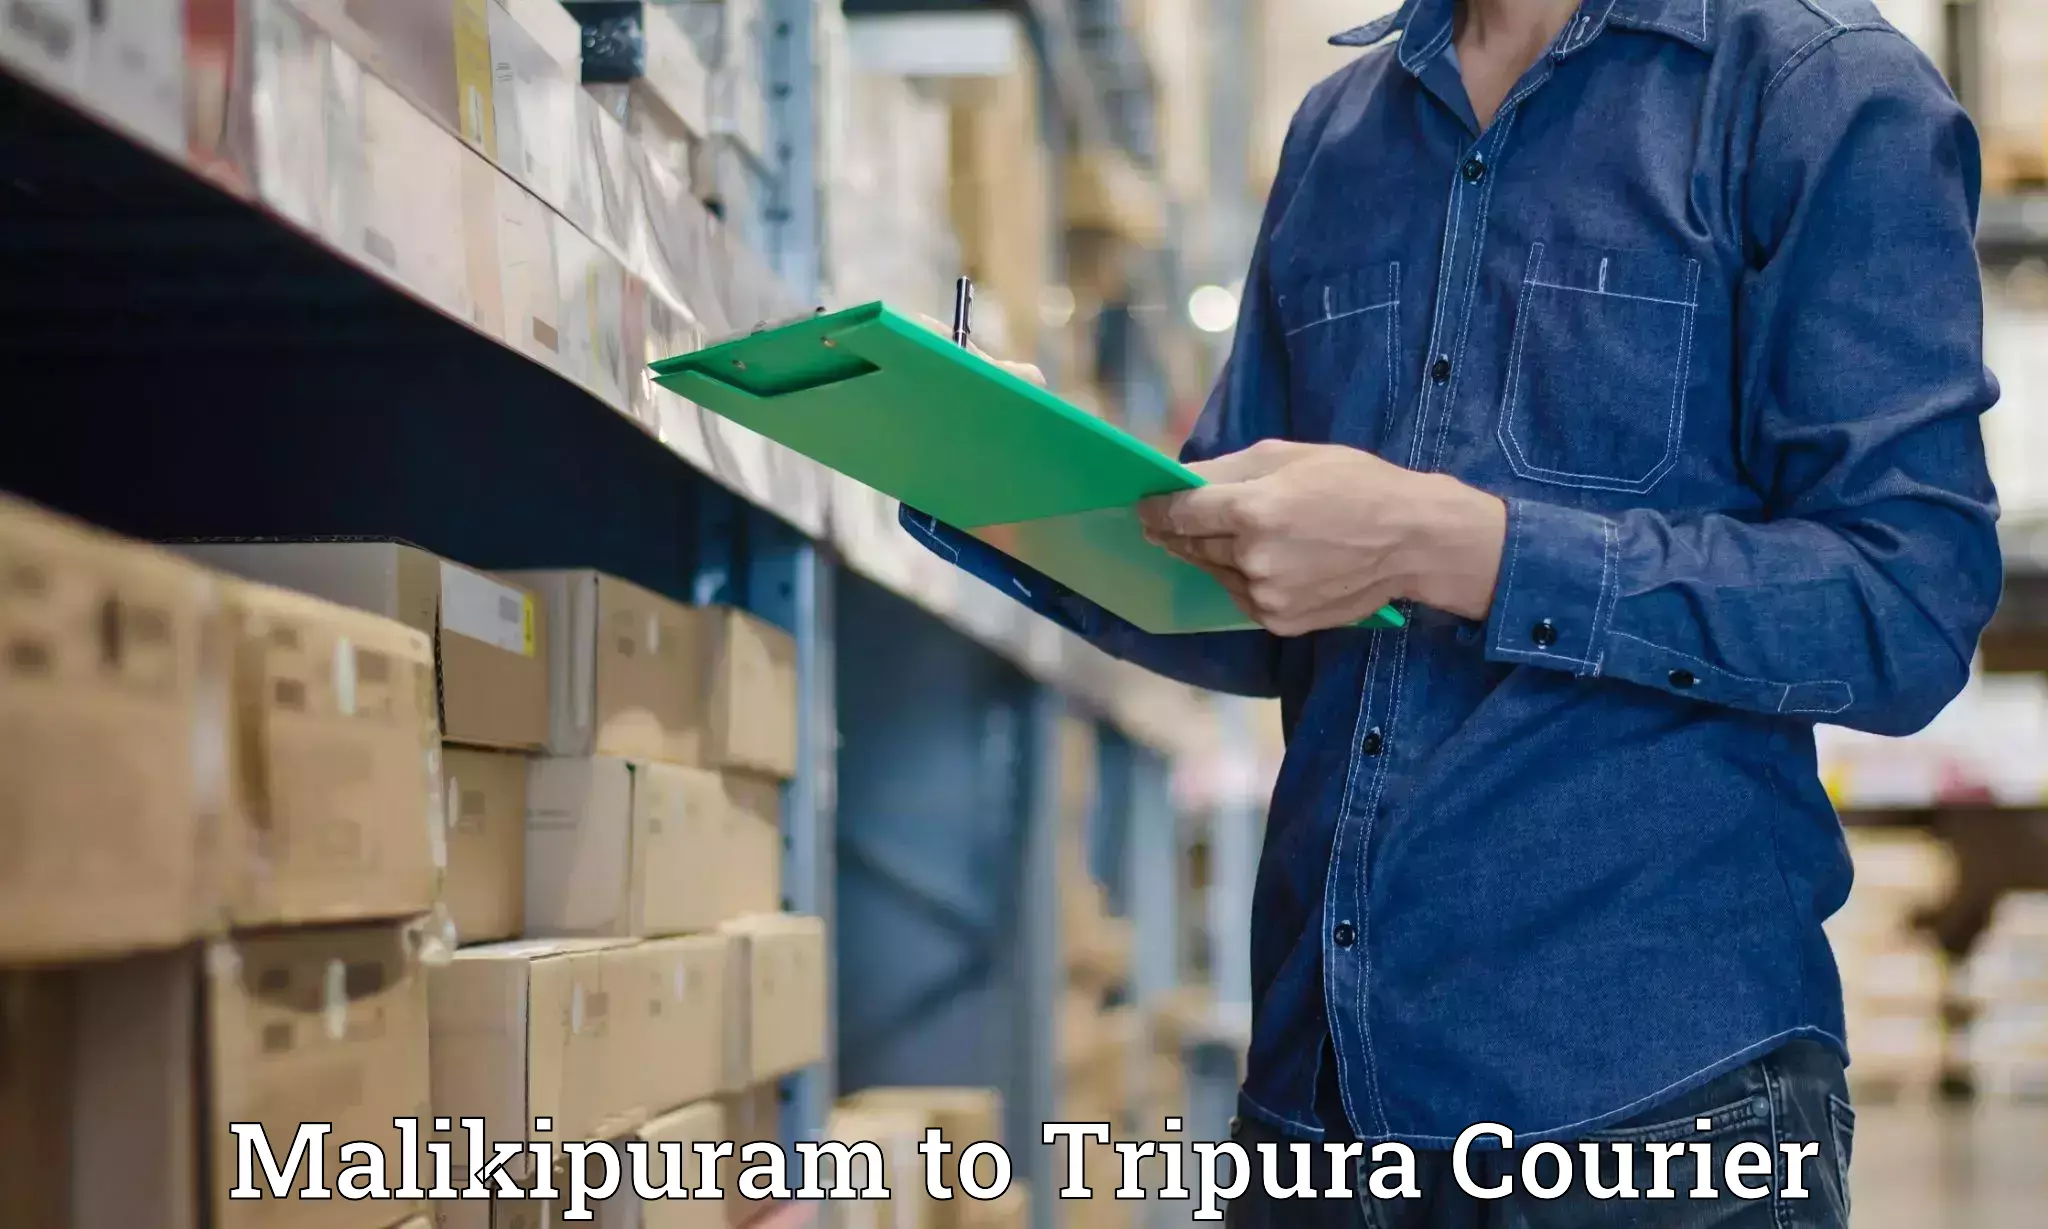 Cash on delivery service Malikipuram to North Tripura